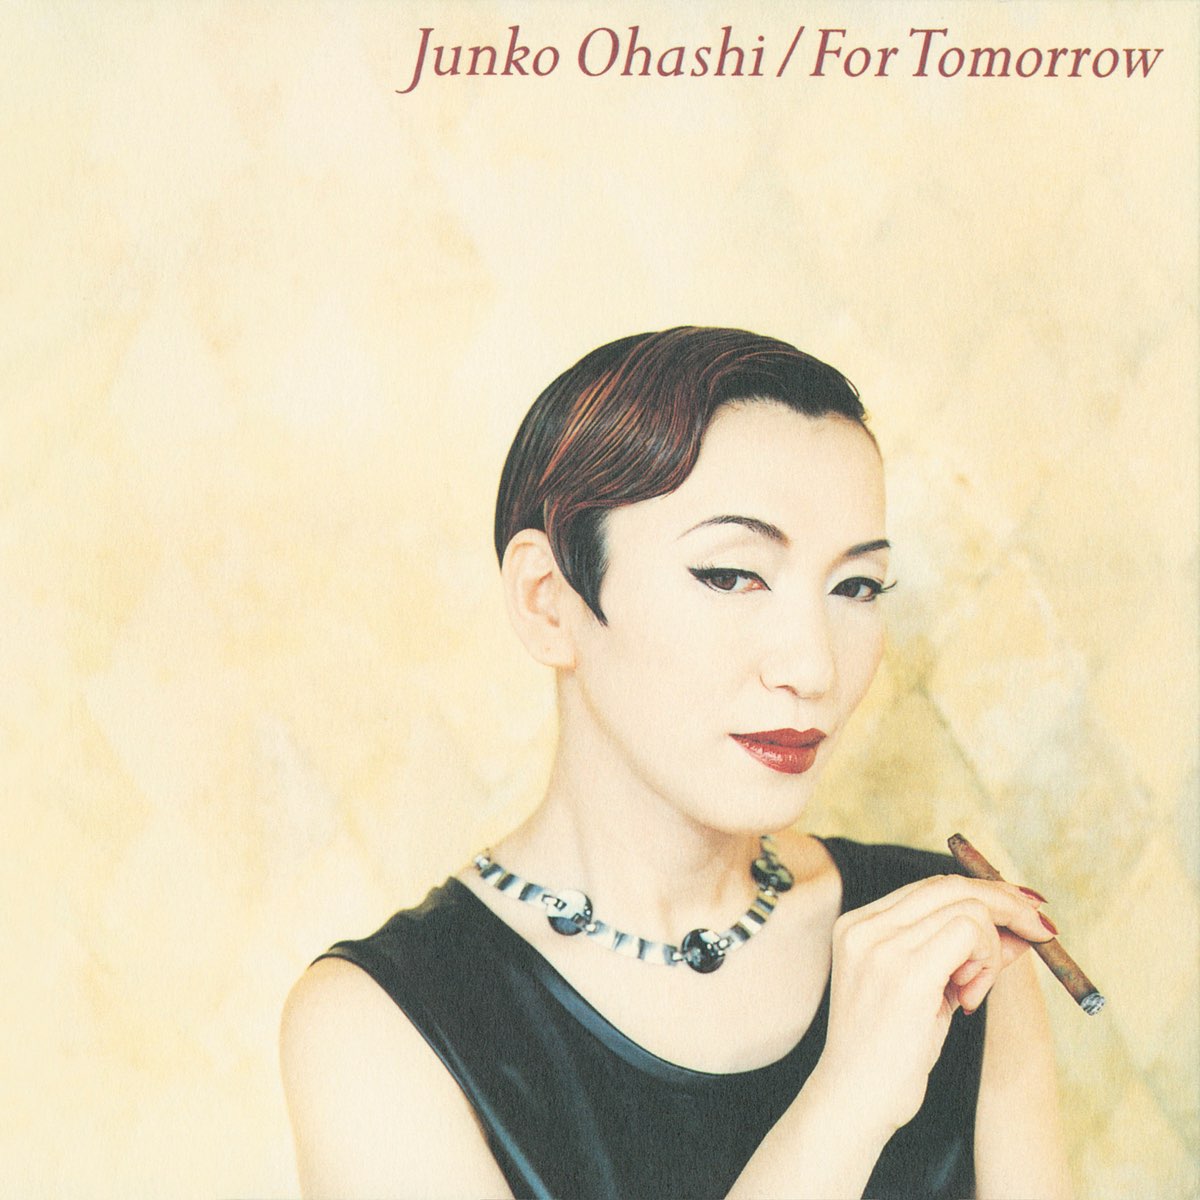 ‎For Tomorrow - Album by JUNKO OHASHI - Apple Music